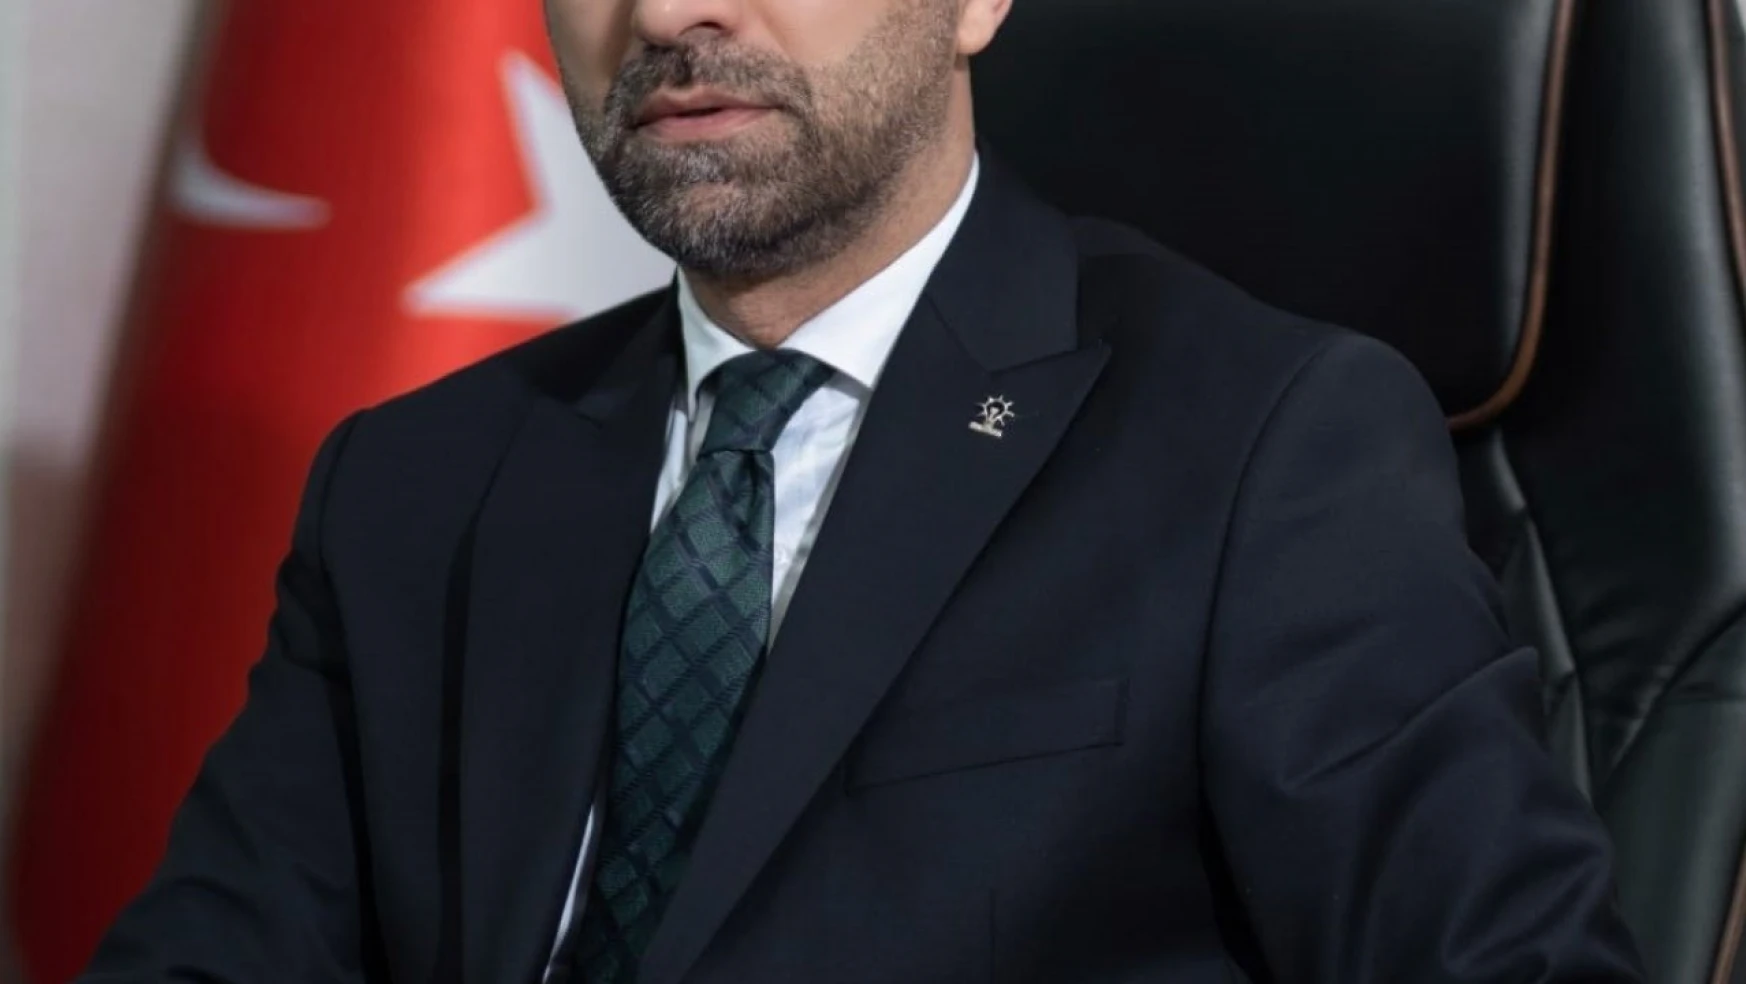 Başkan Küçükoğlu'ndan CHP provokasyonuna tepki